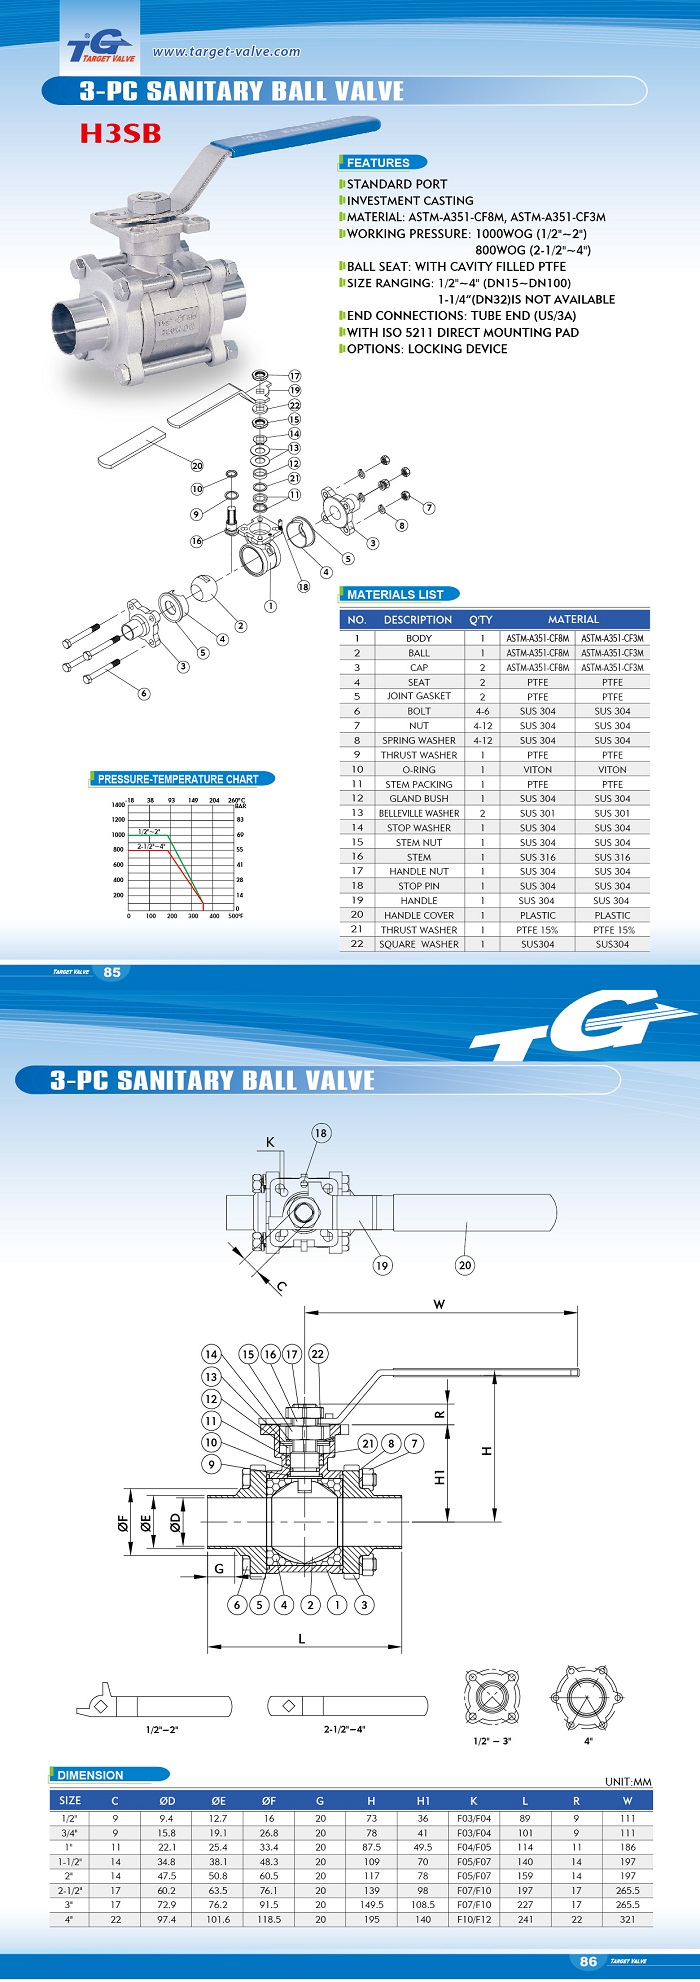 3-PC Sanitary Ball Valve